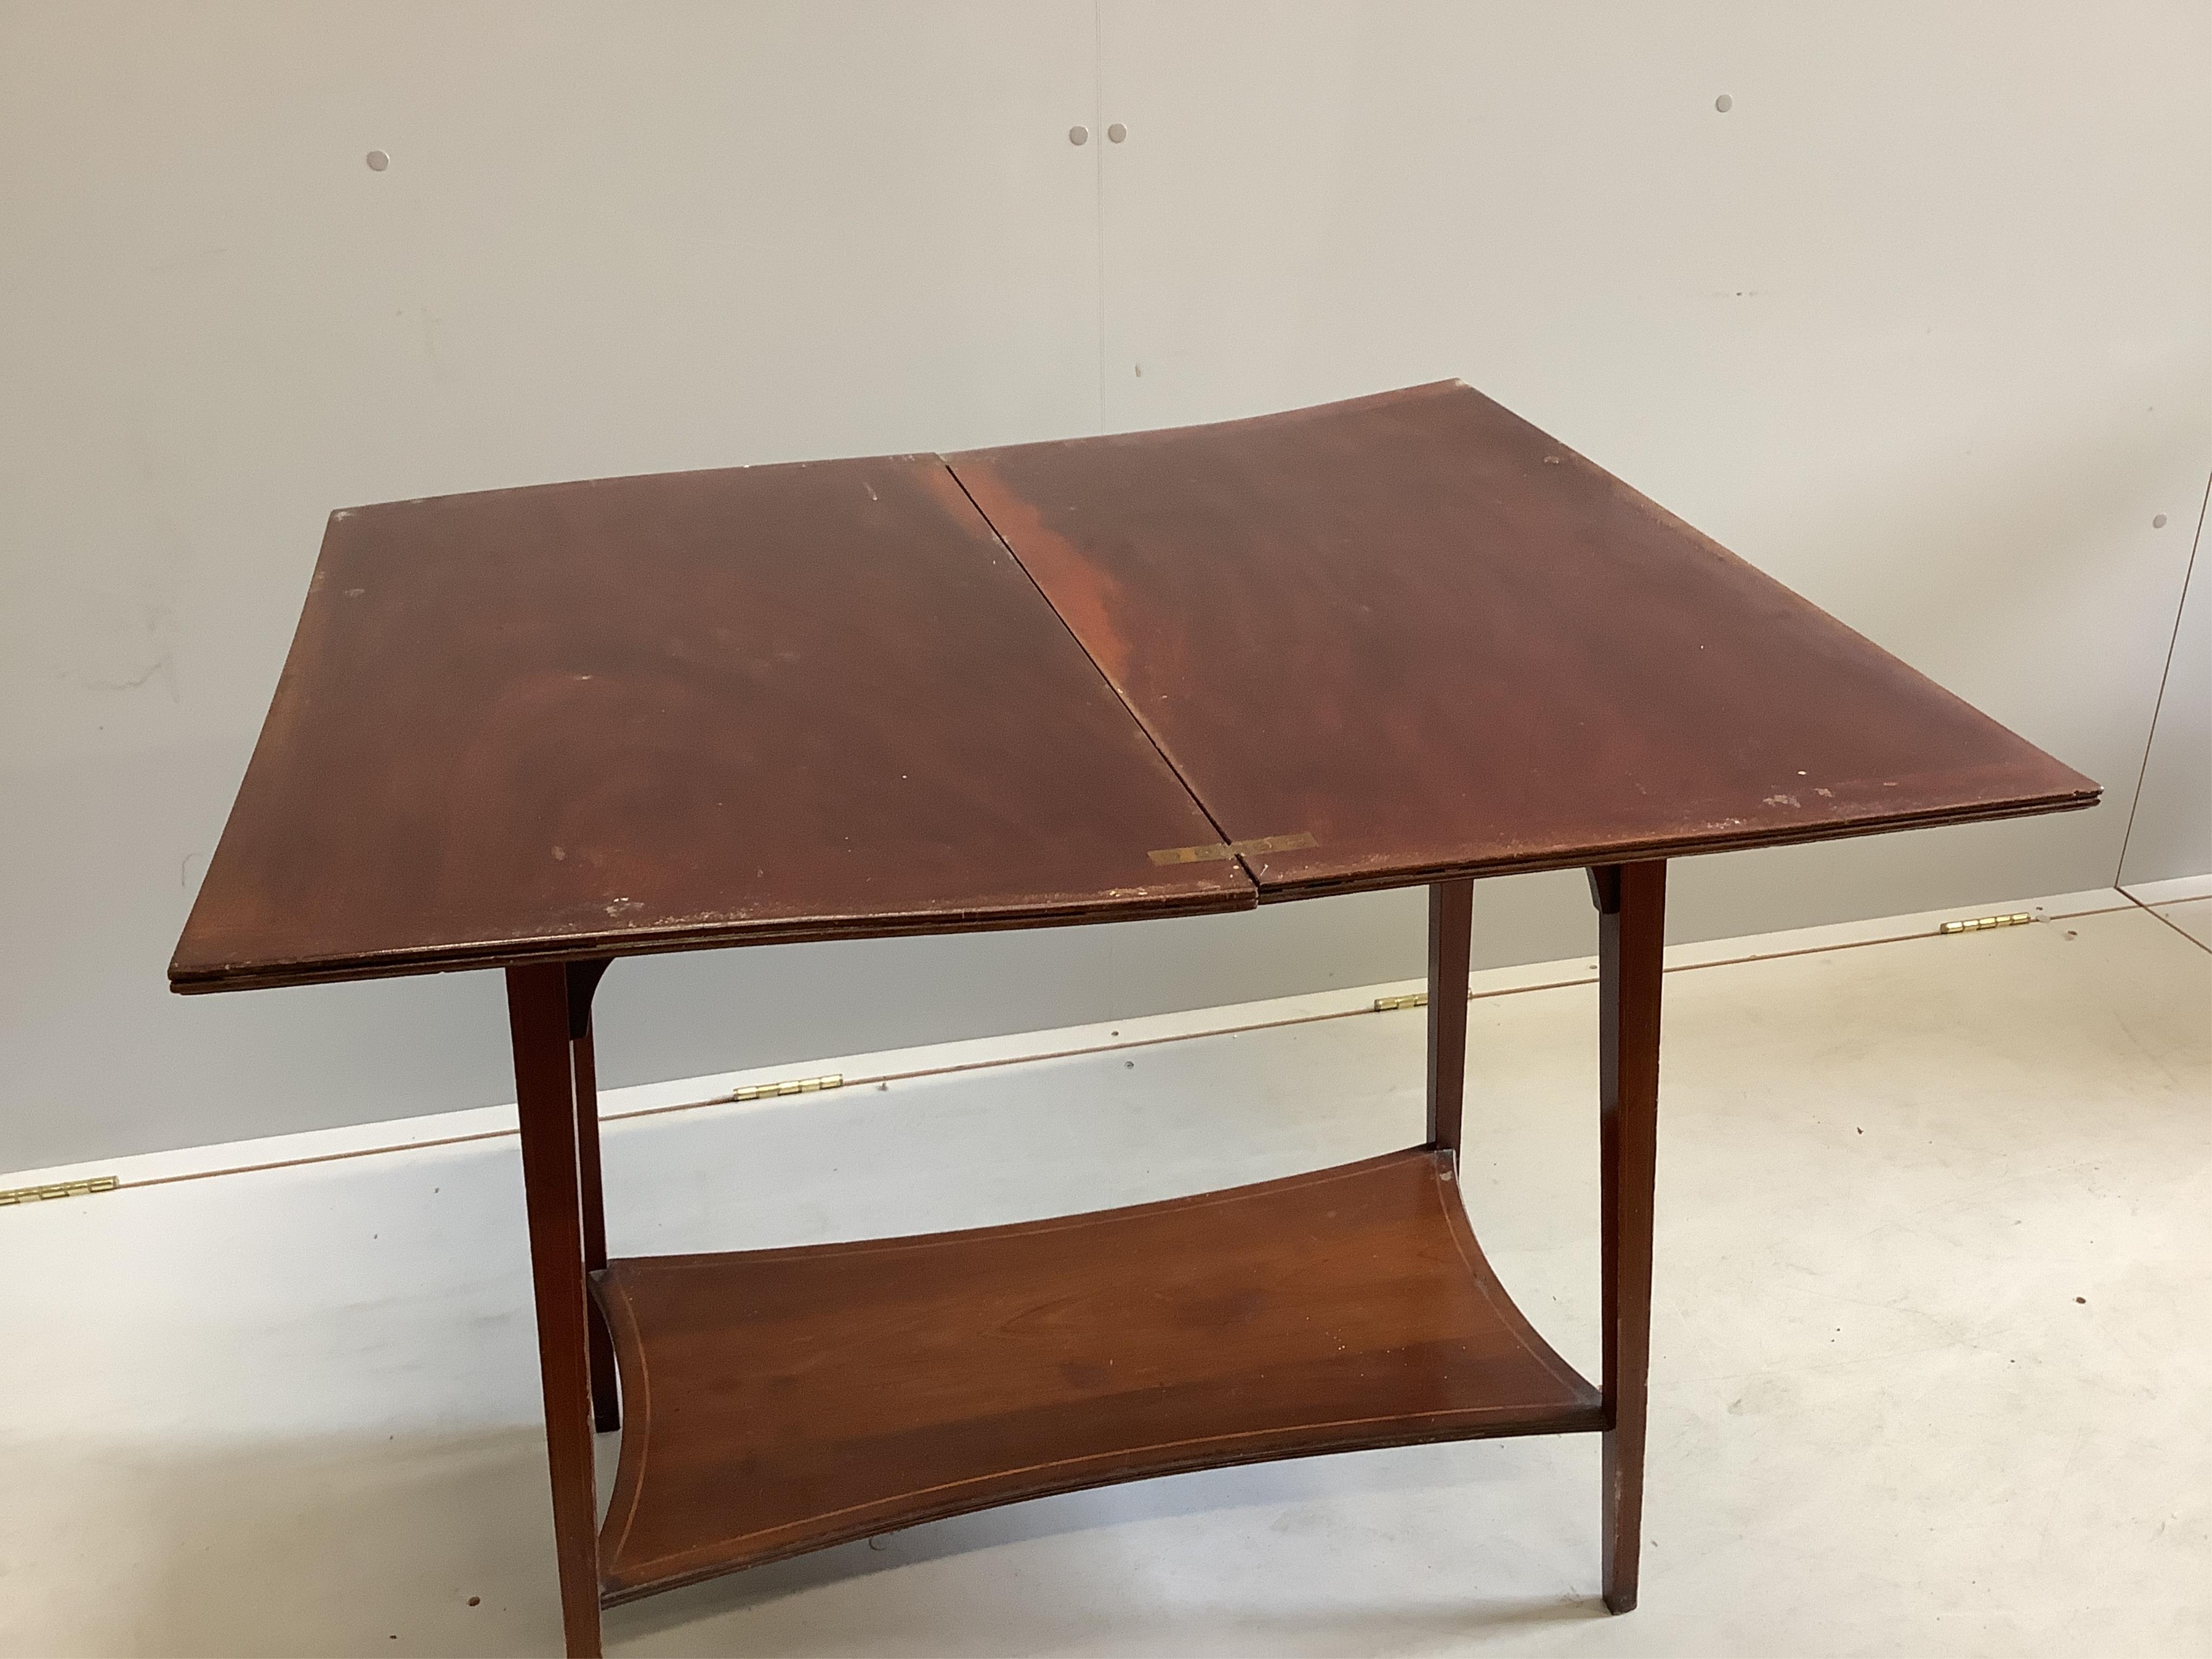 An Edwardian satinwood banded mahogany rectangular folding tea table, width 75cm, depth 42cm, height 73cm. Condition - fair